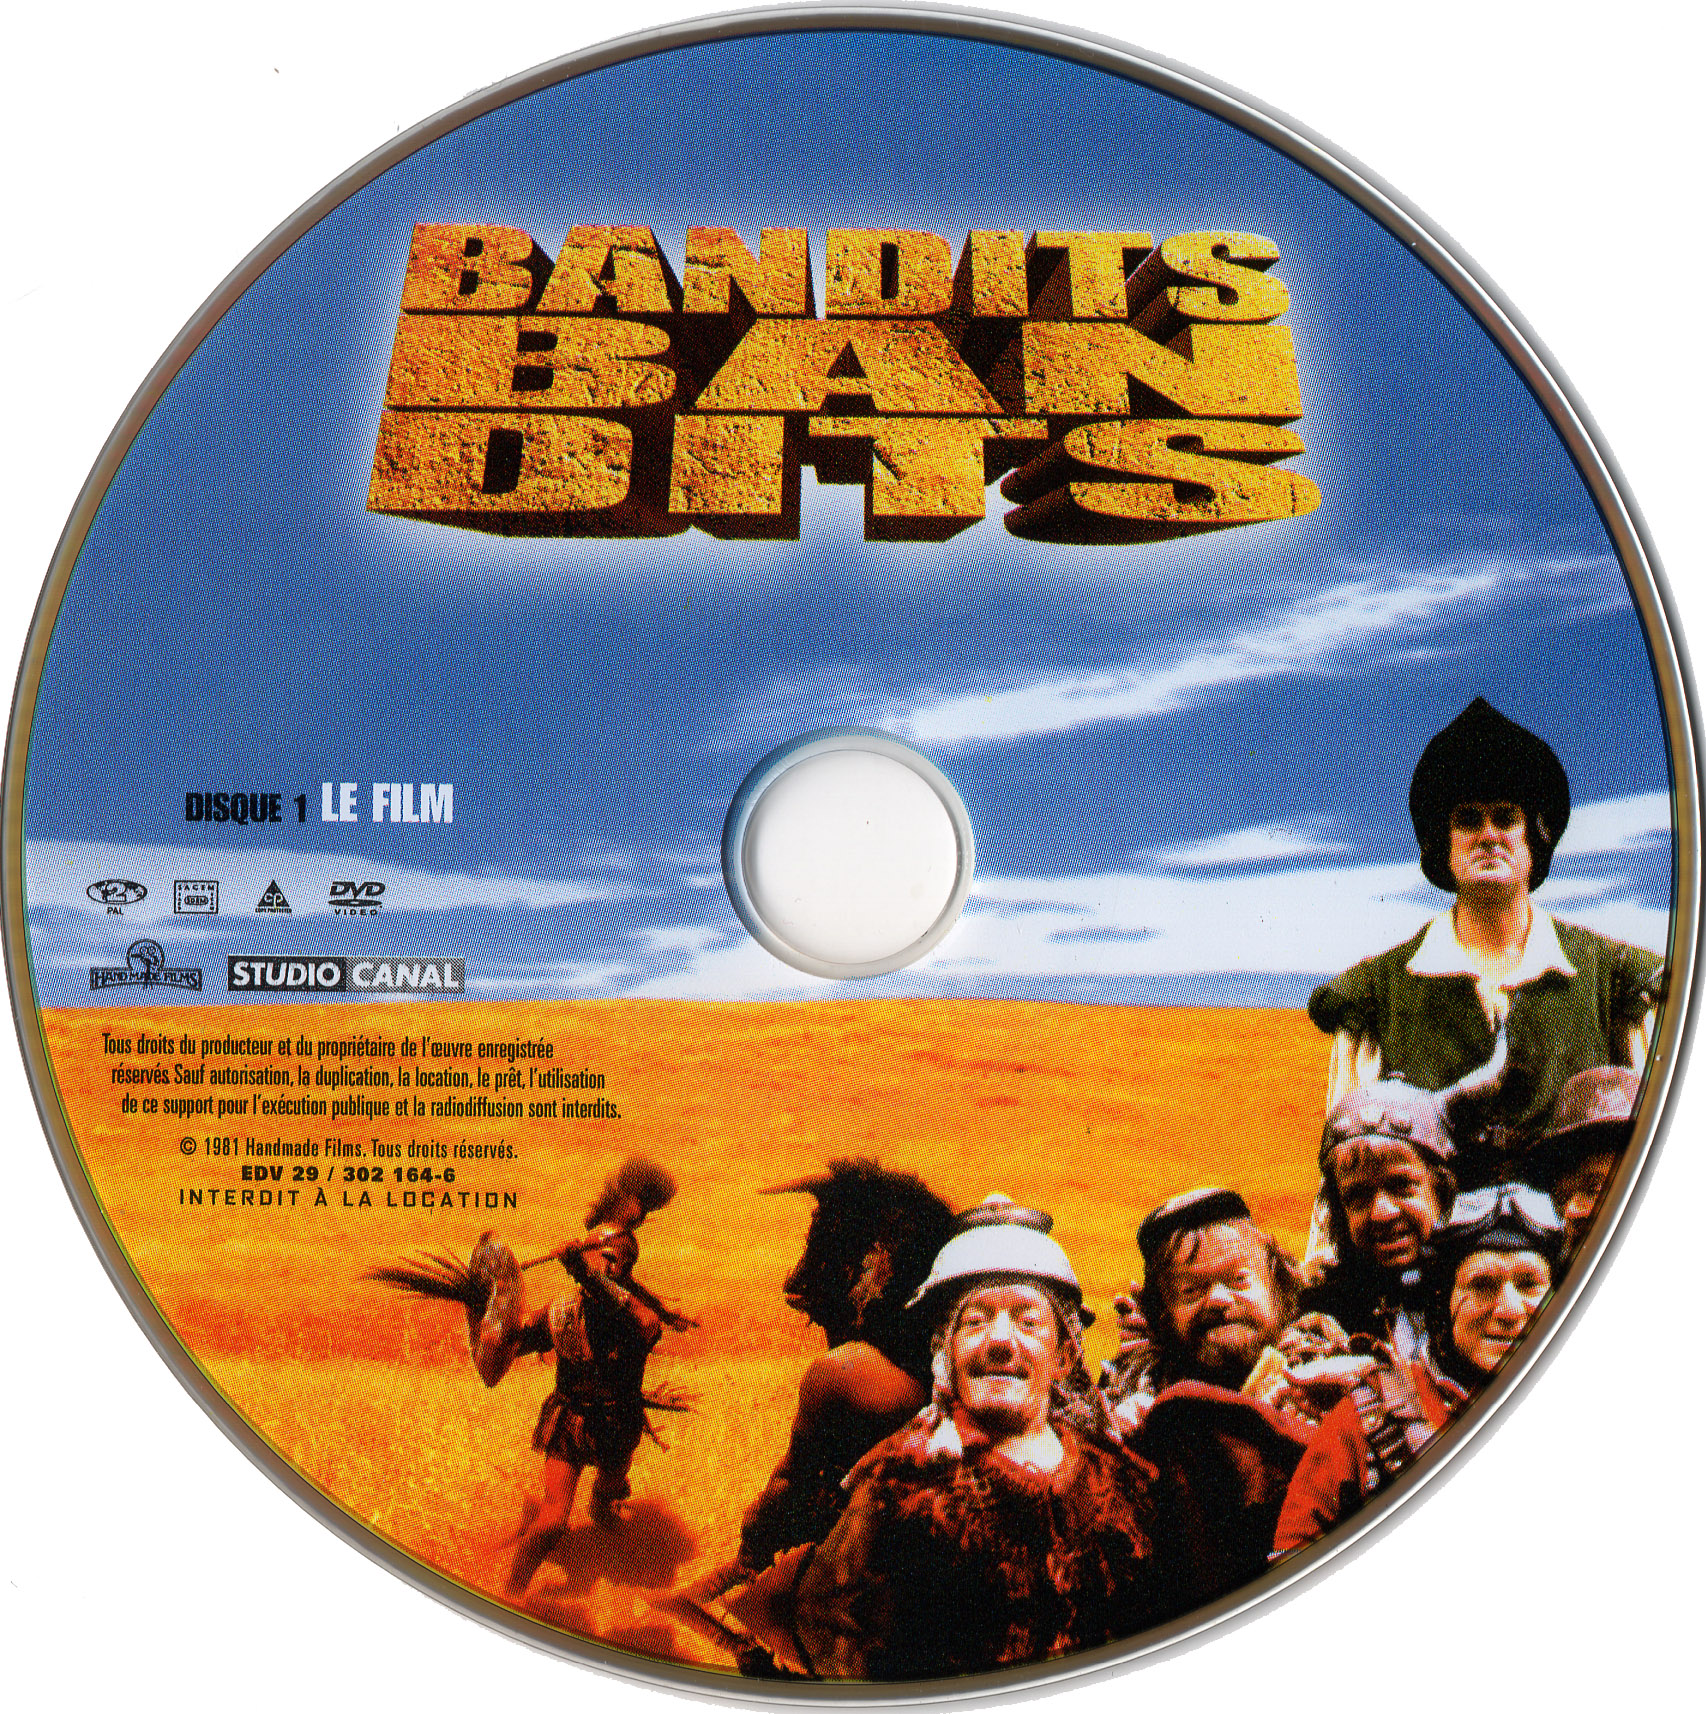 Bandits bandits DISC 1